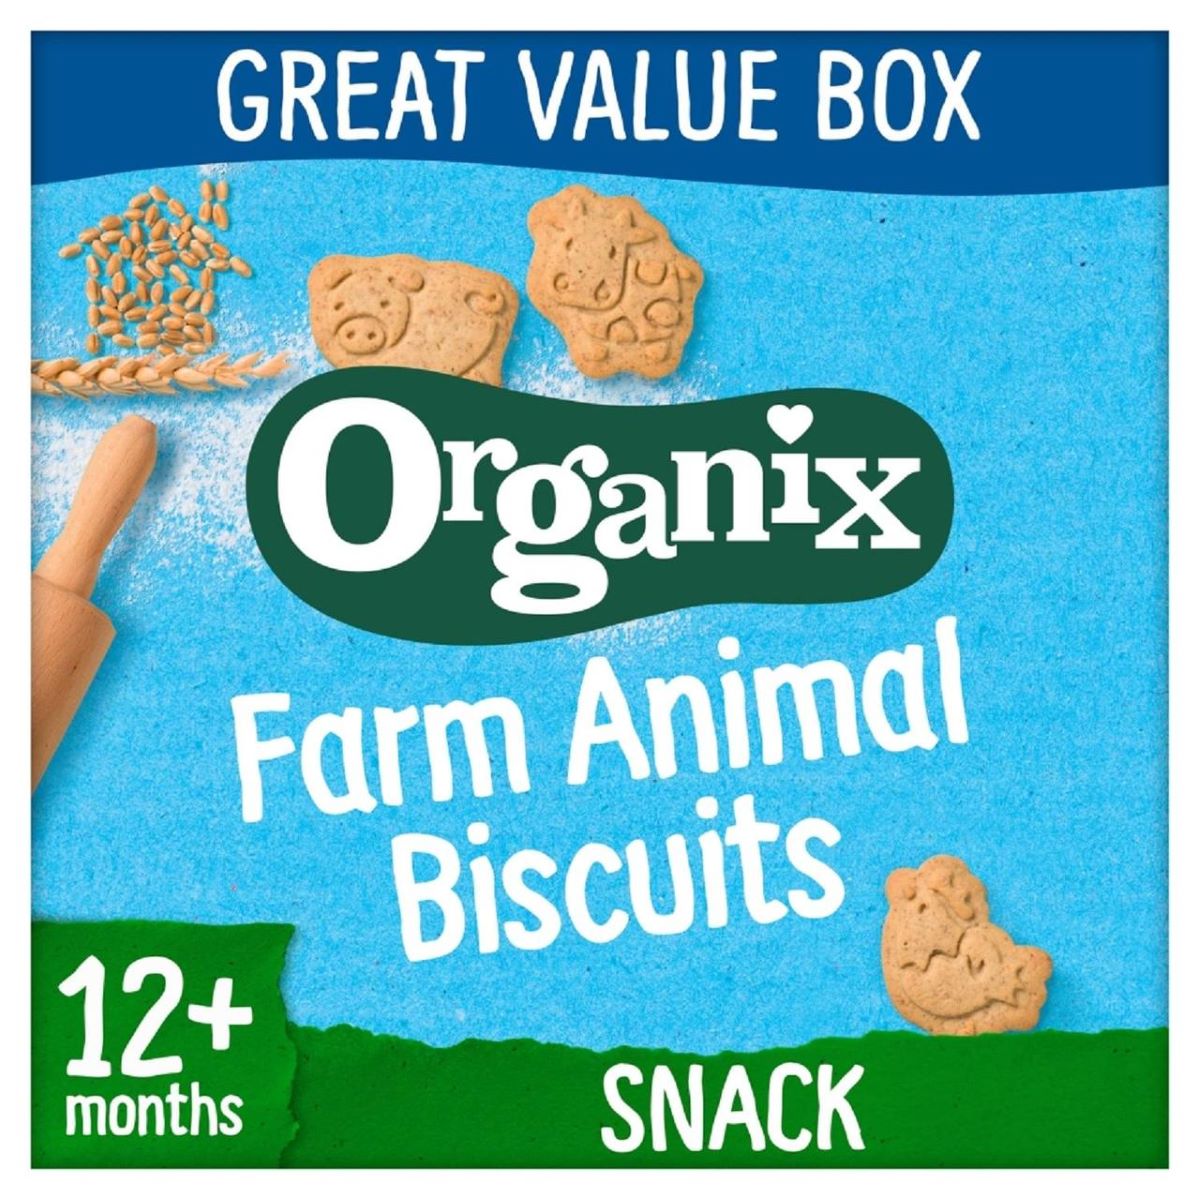 Organix Farm Animal Biscuits, 12 mths Value Box 100g